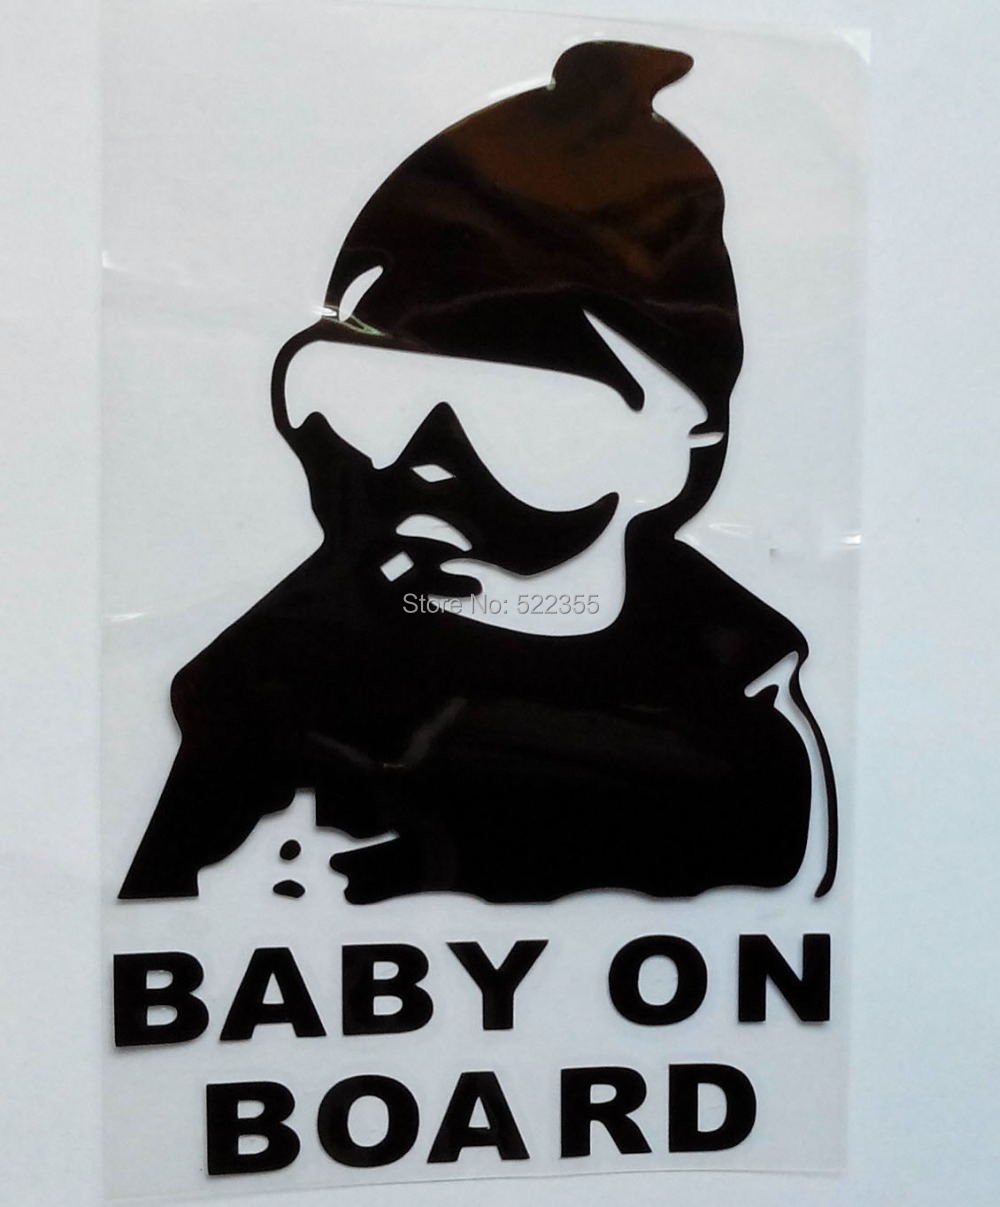 1Pcs Big size 21CM COOL BABY ON BOARD Reflective Vinyl car styling sticker waterproof free shipping